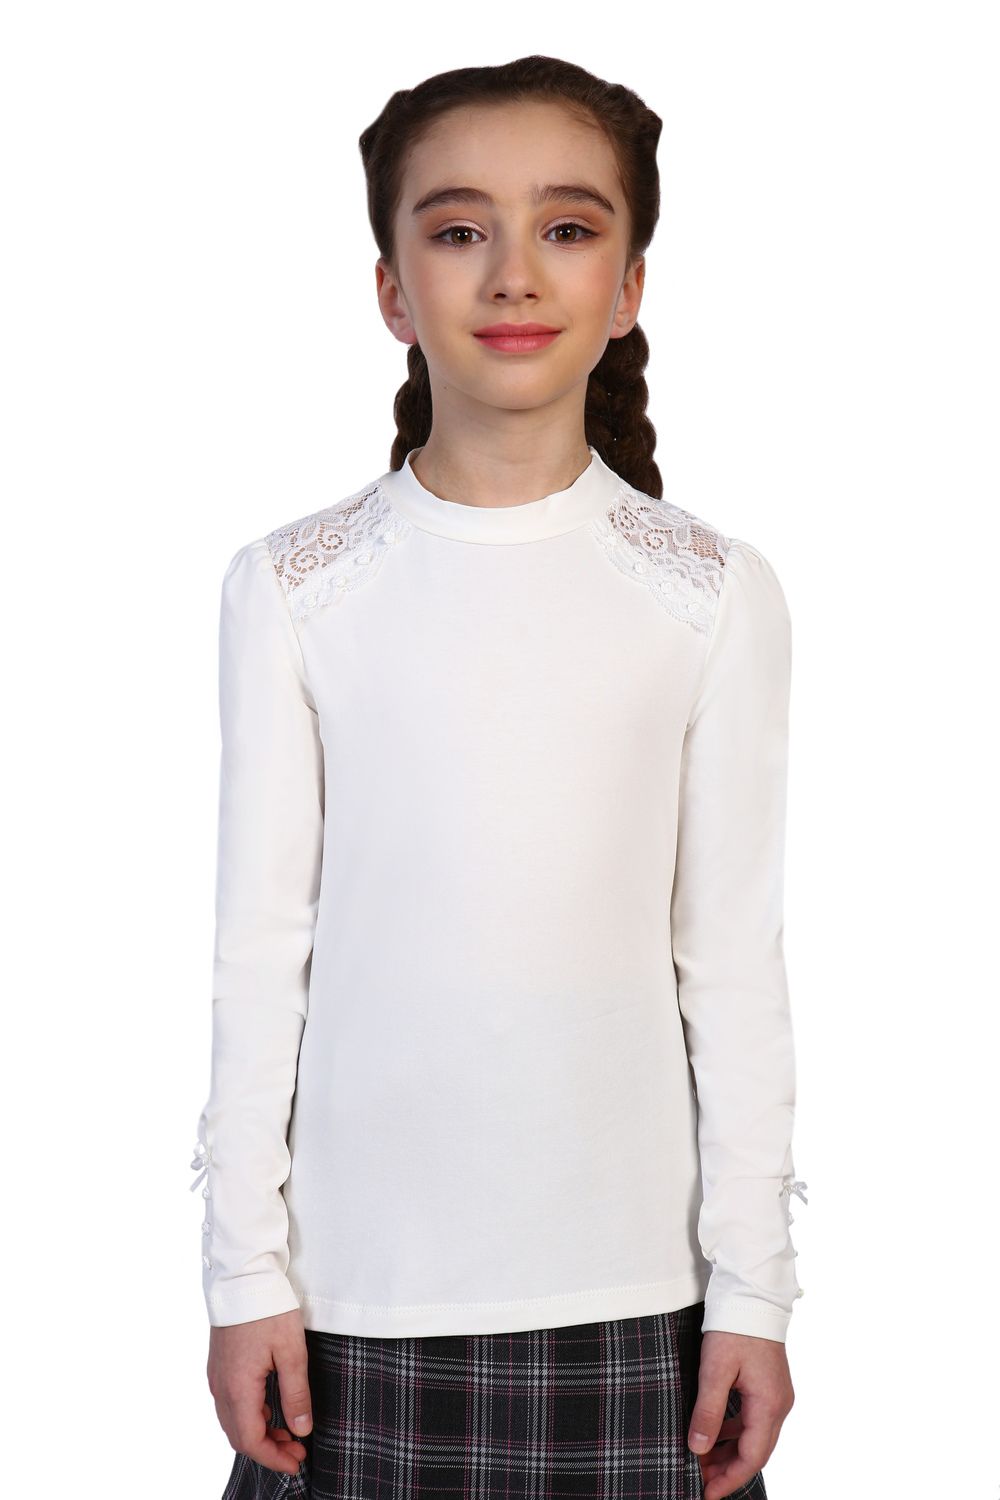 Блузка для девочки Алена арт. 13143 - крем